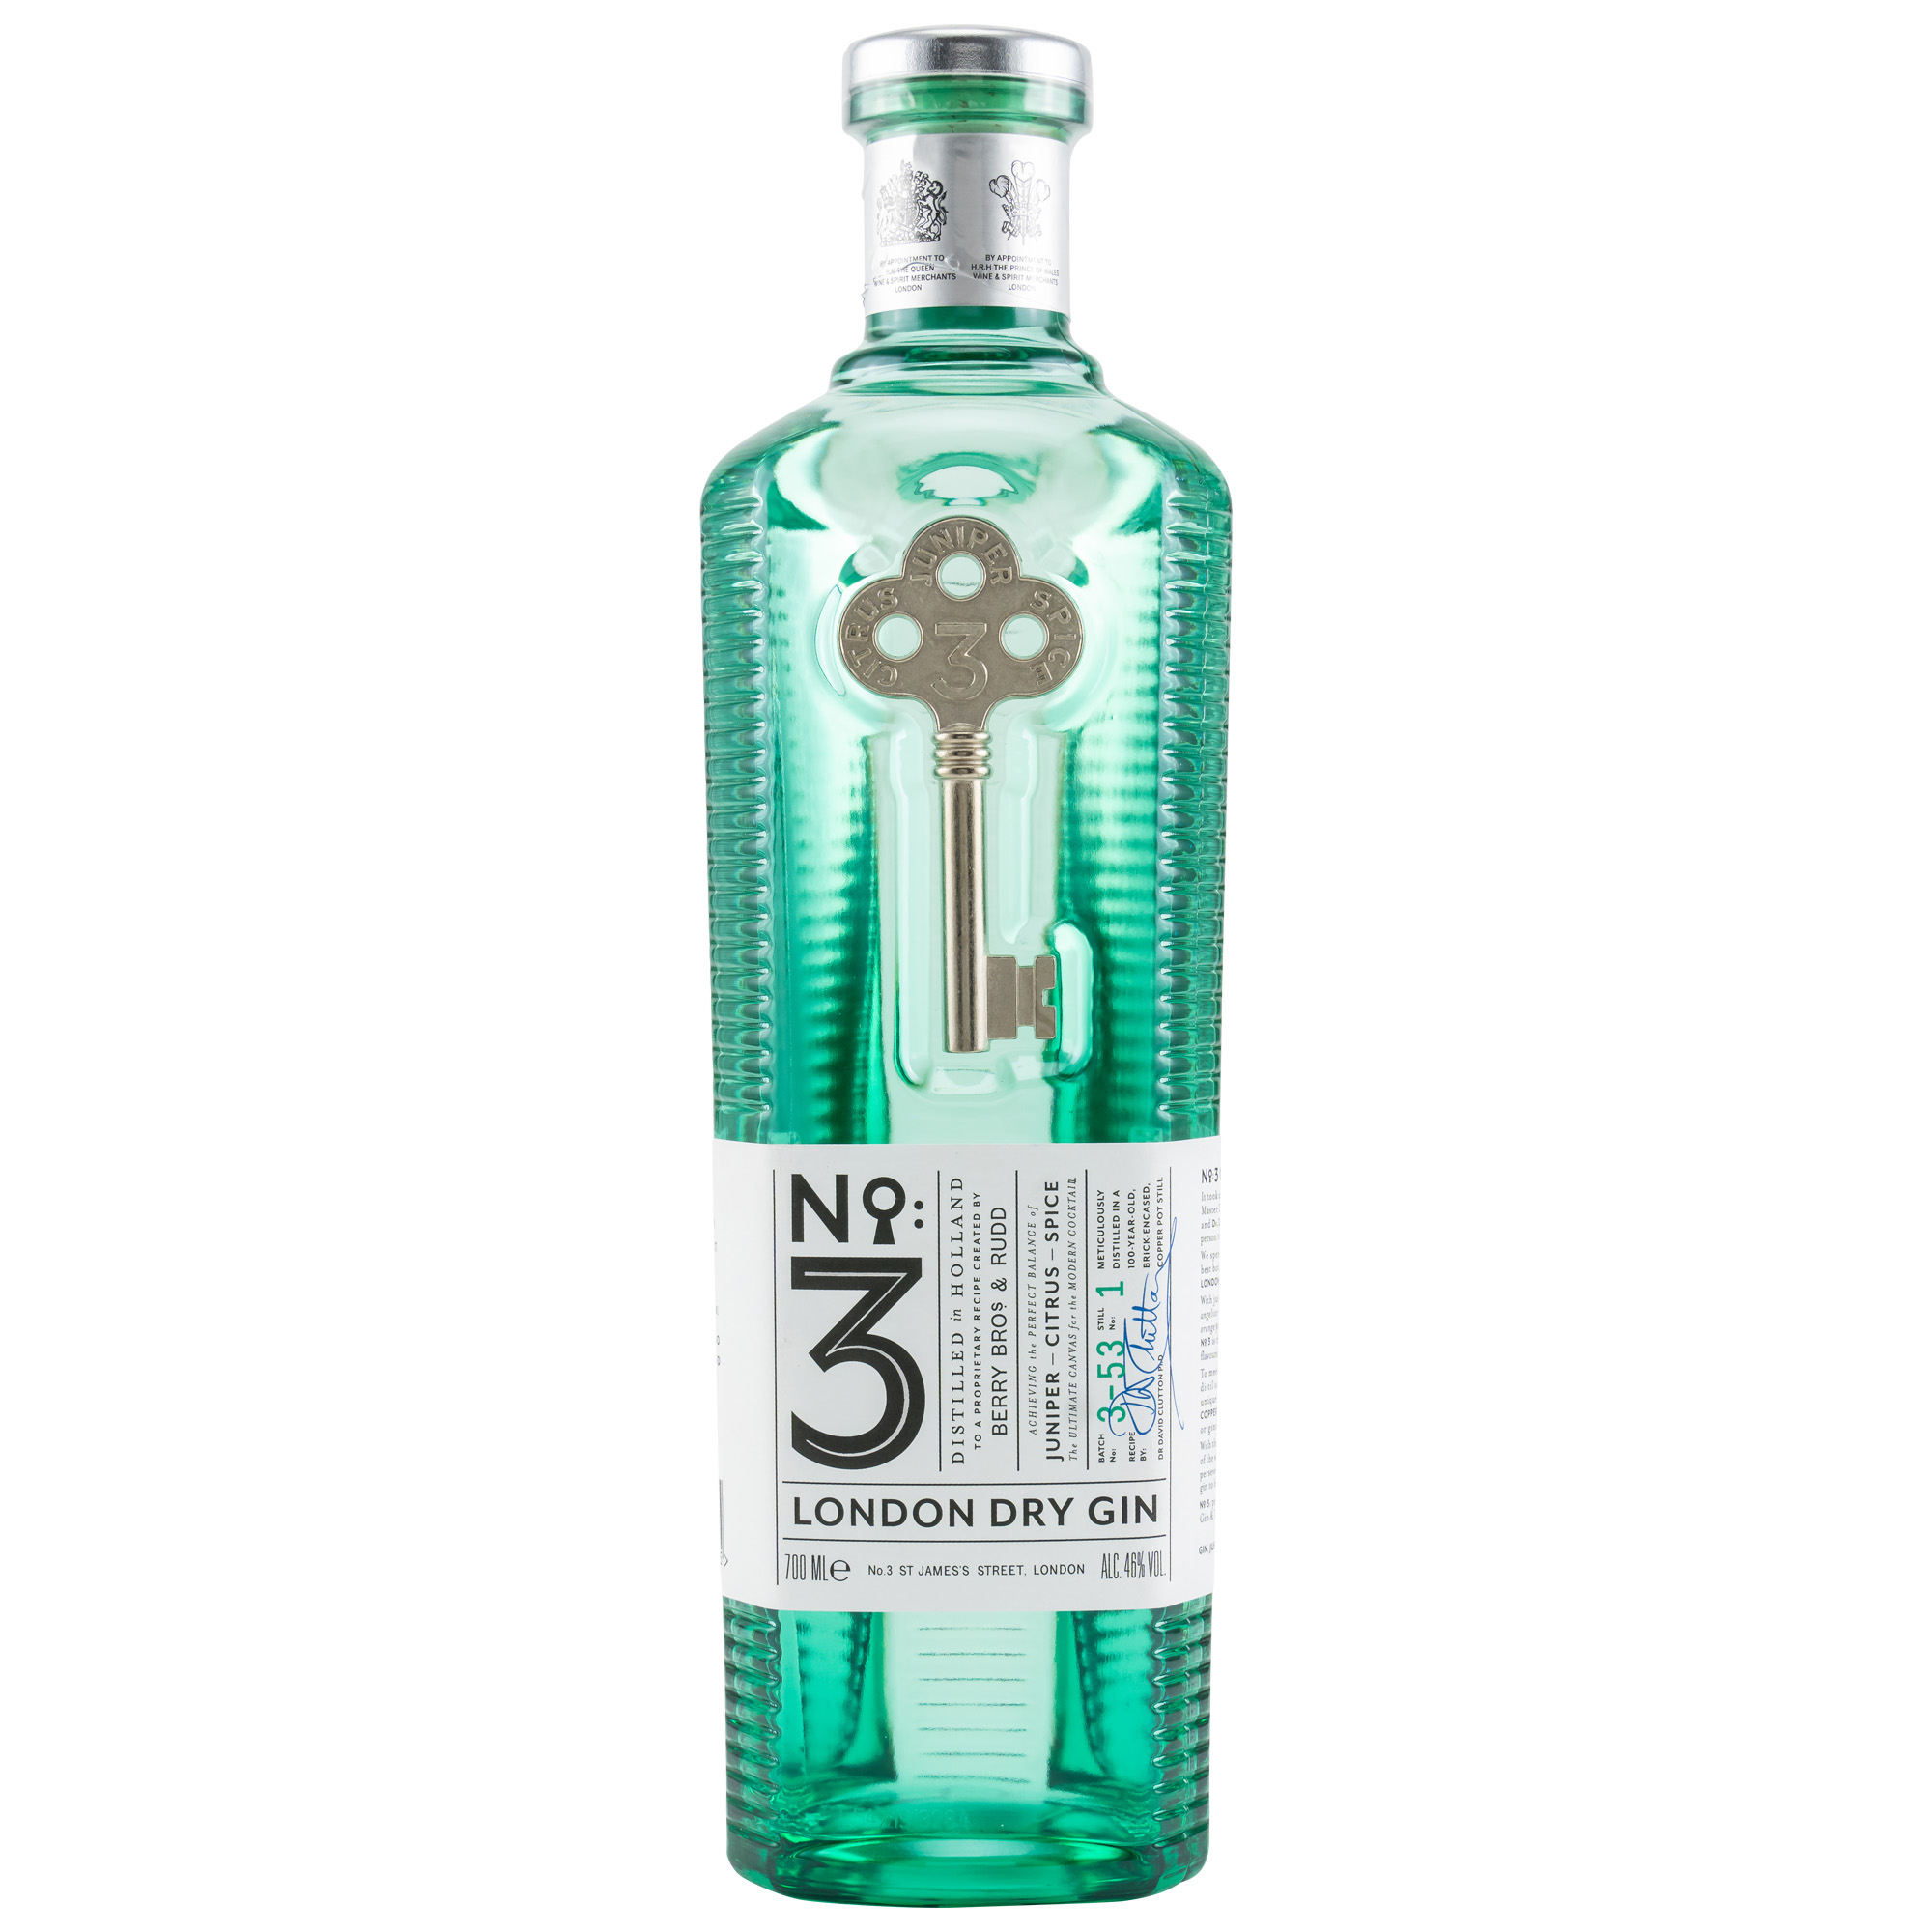 No.3 - London Dry Gin 46% Berry Bros. & Rudd